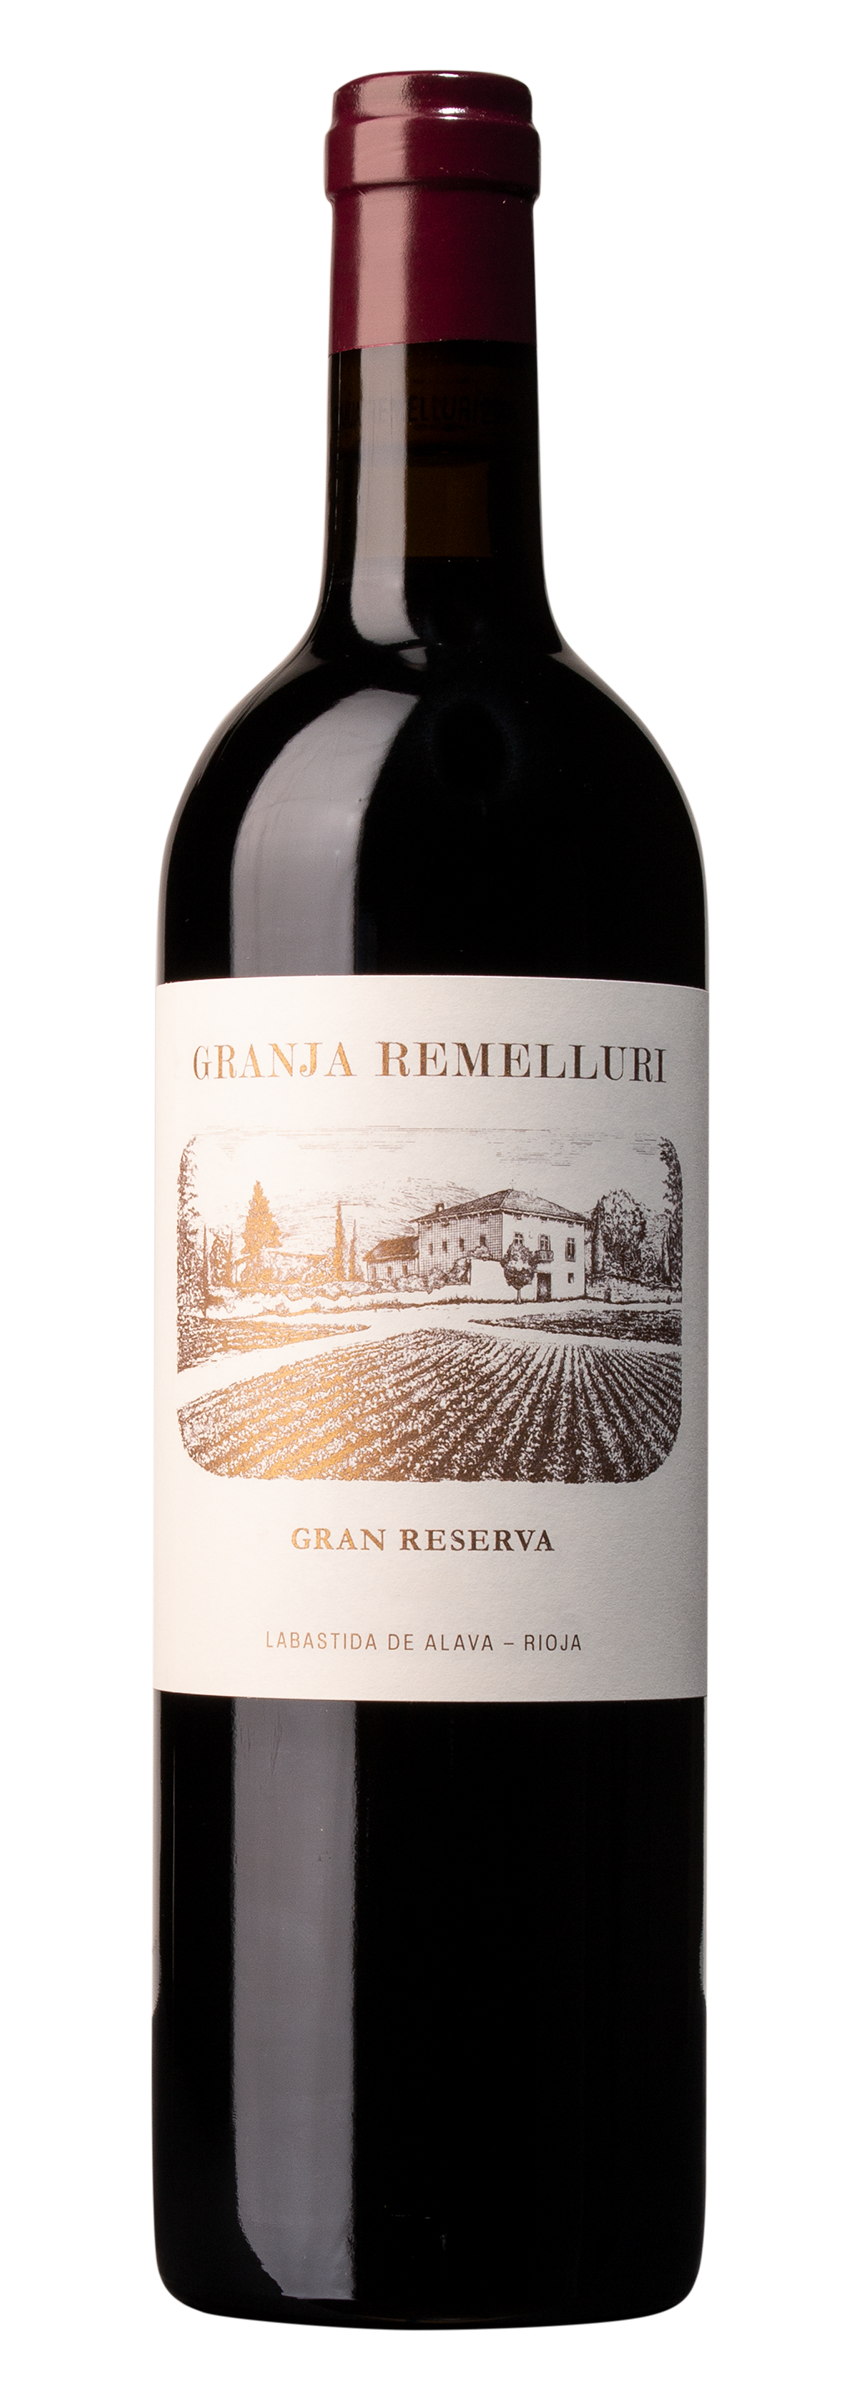 „Granja Remelluri“ Gran Reserva DOCa Rioja, tinto